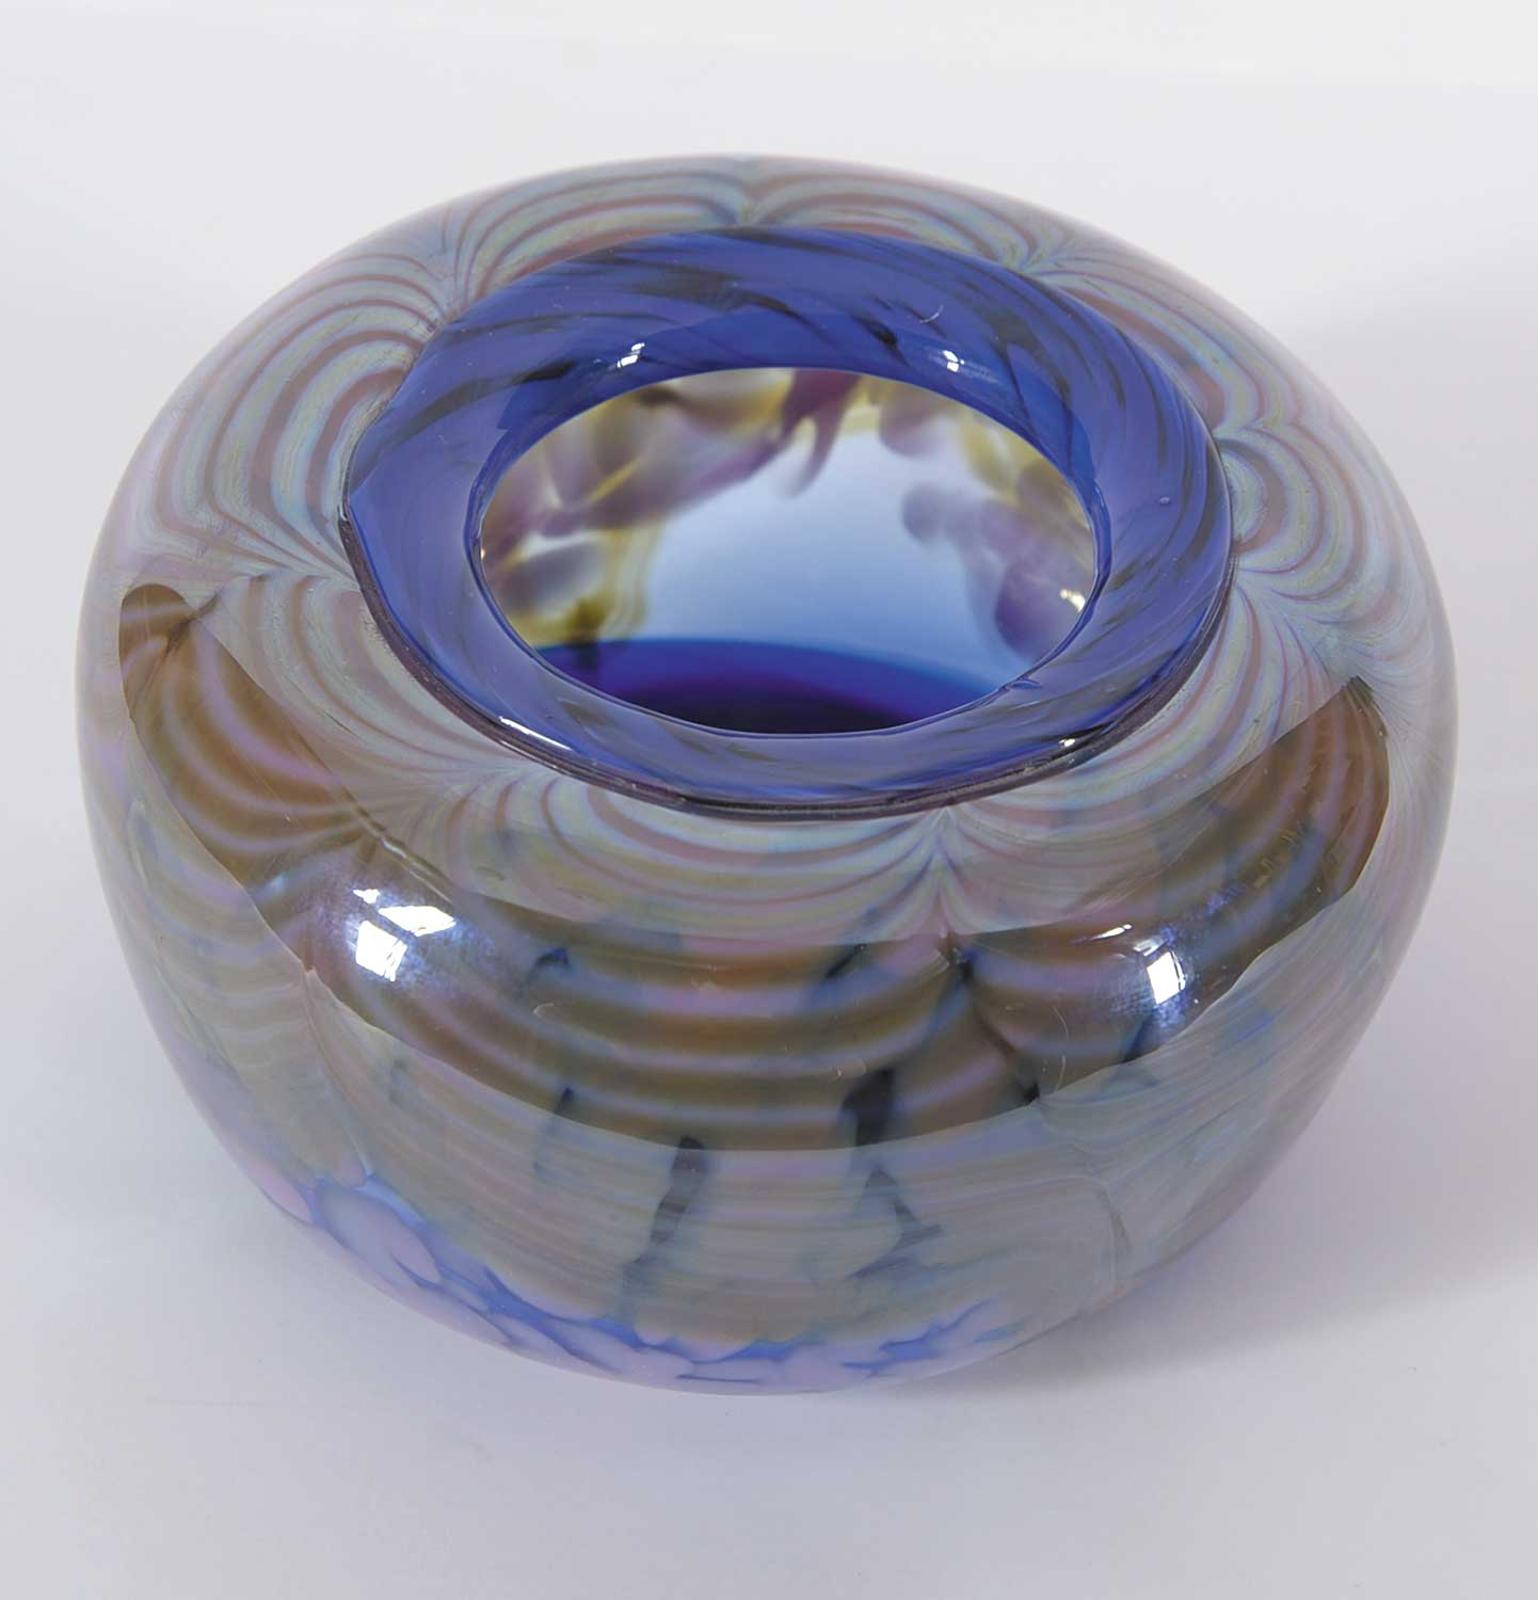 Darren James - Small Purple/Blue Floral Vase